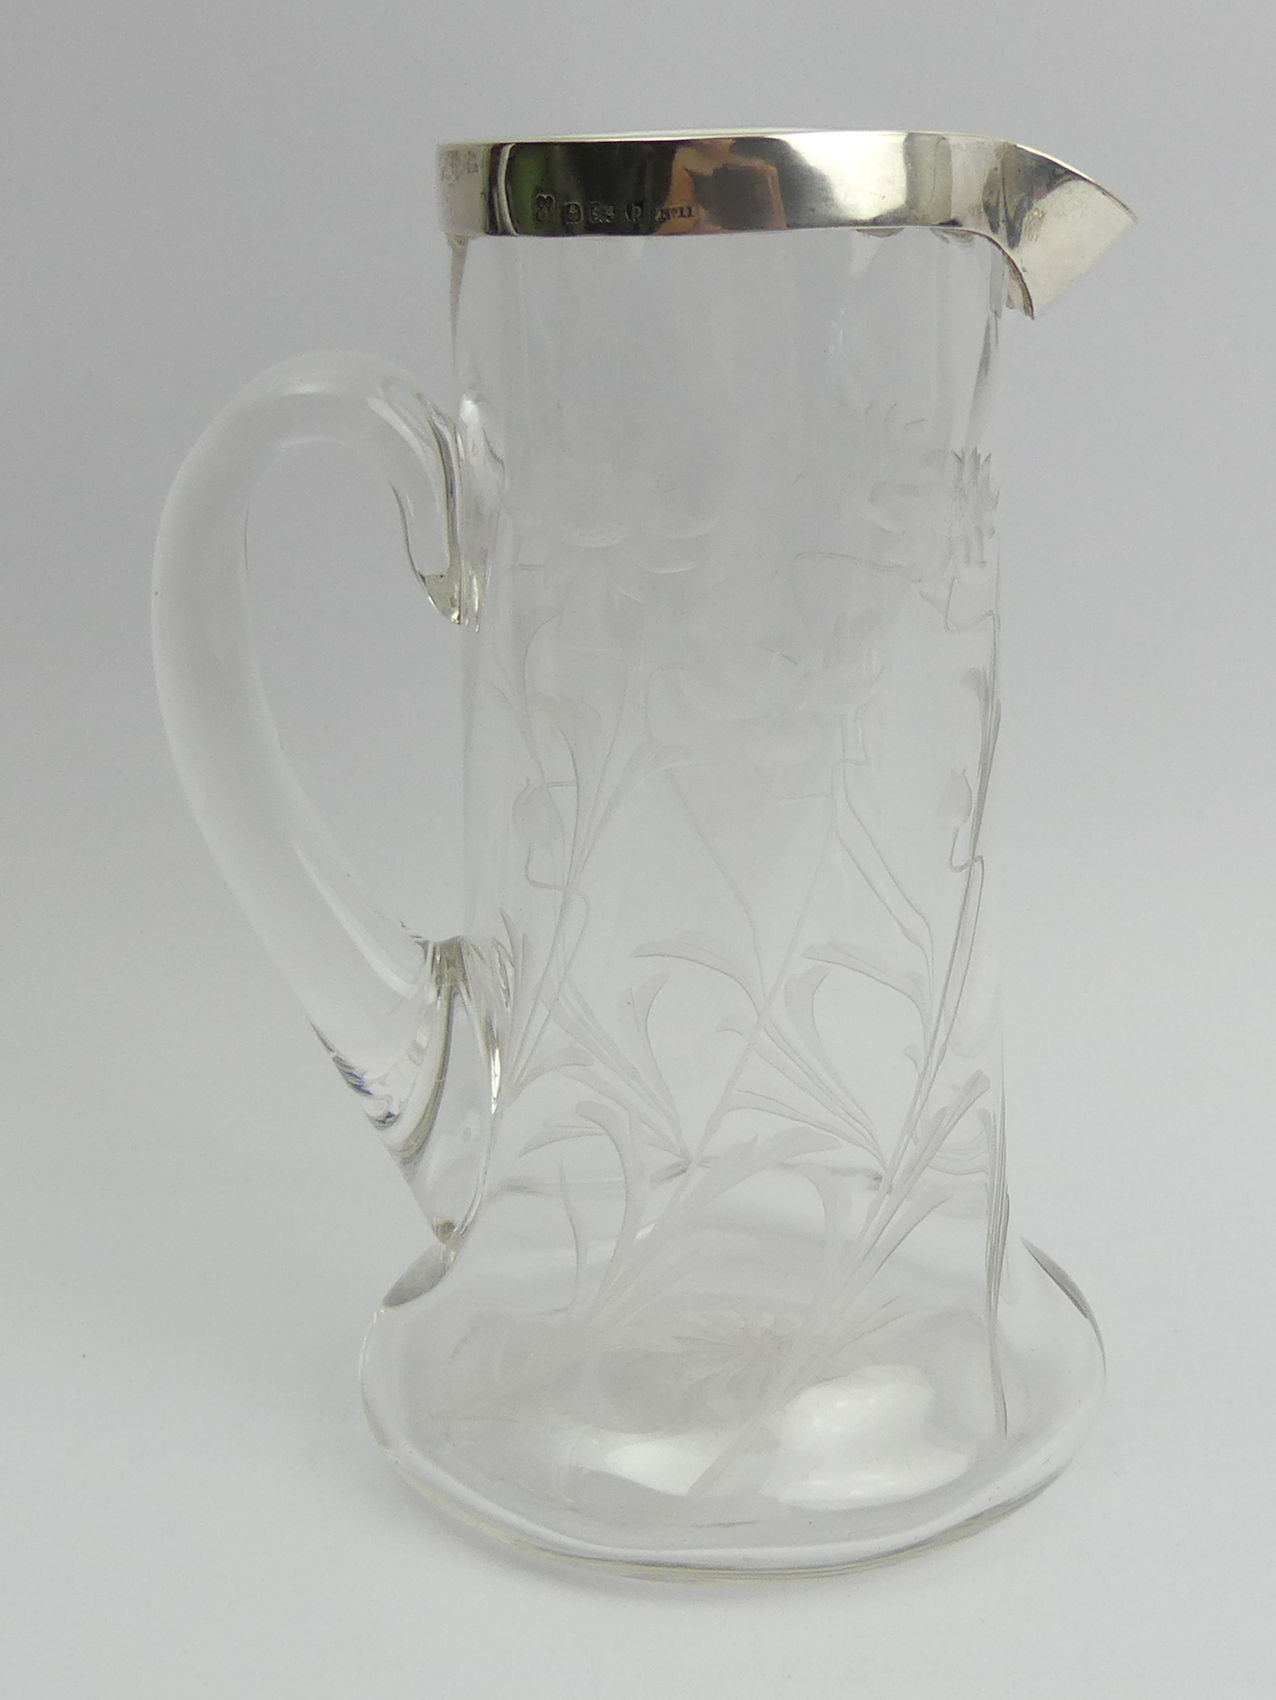 Art Nouveau silver mounted glass engraved glass water jug, Thomas Latham & Ernest Morton, Birm. - Image 2 of 5